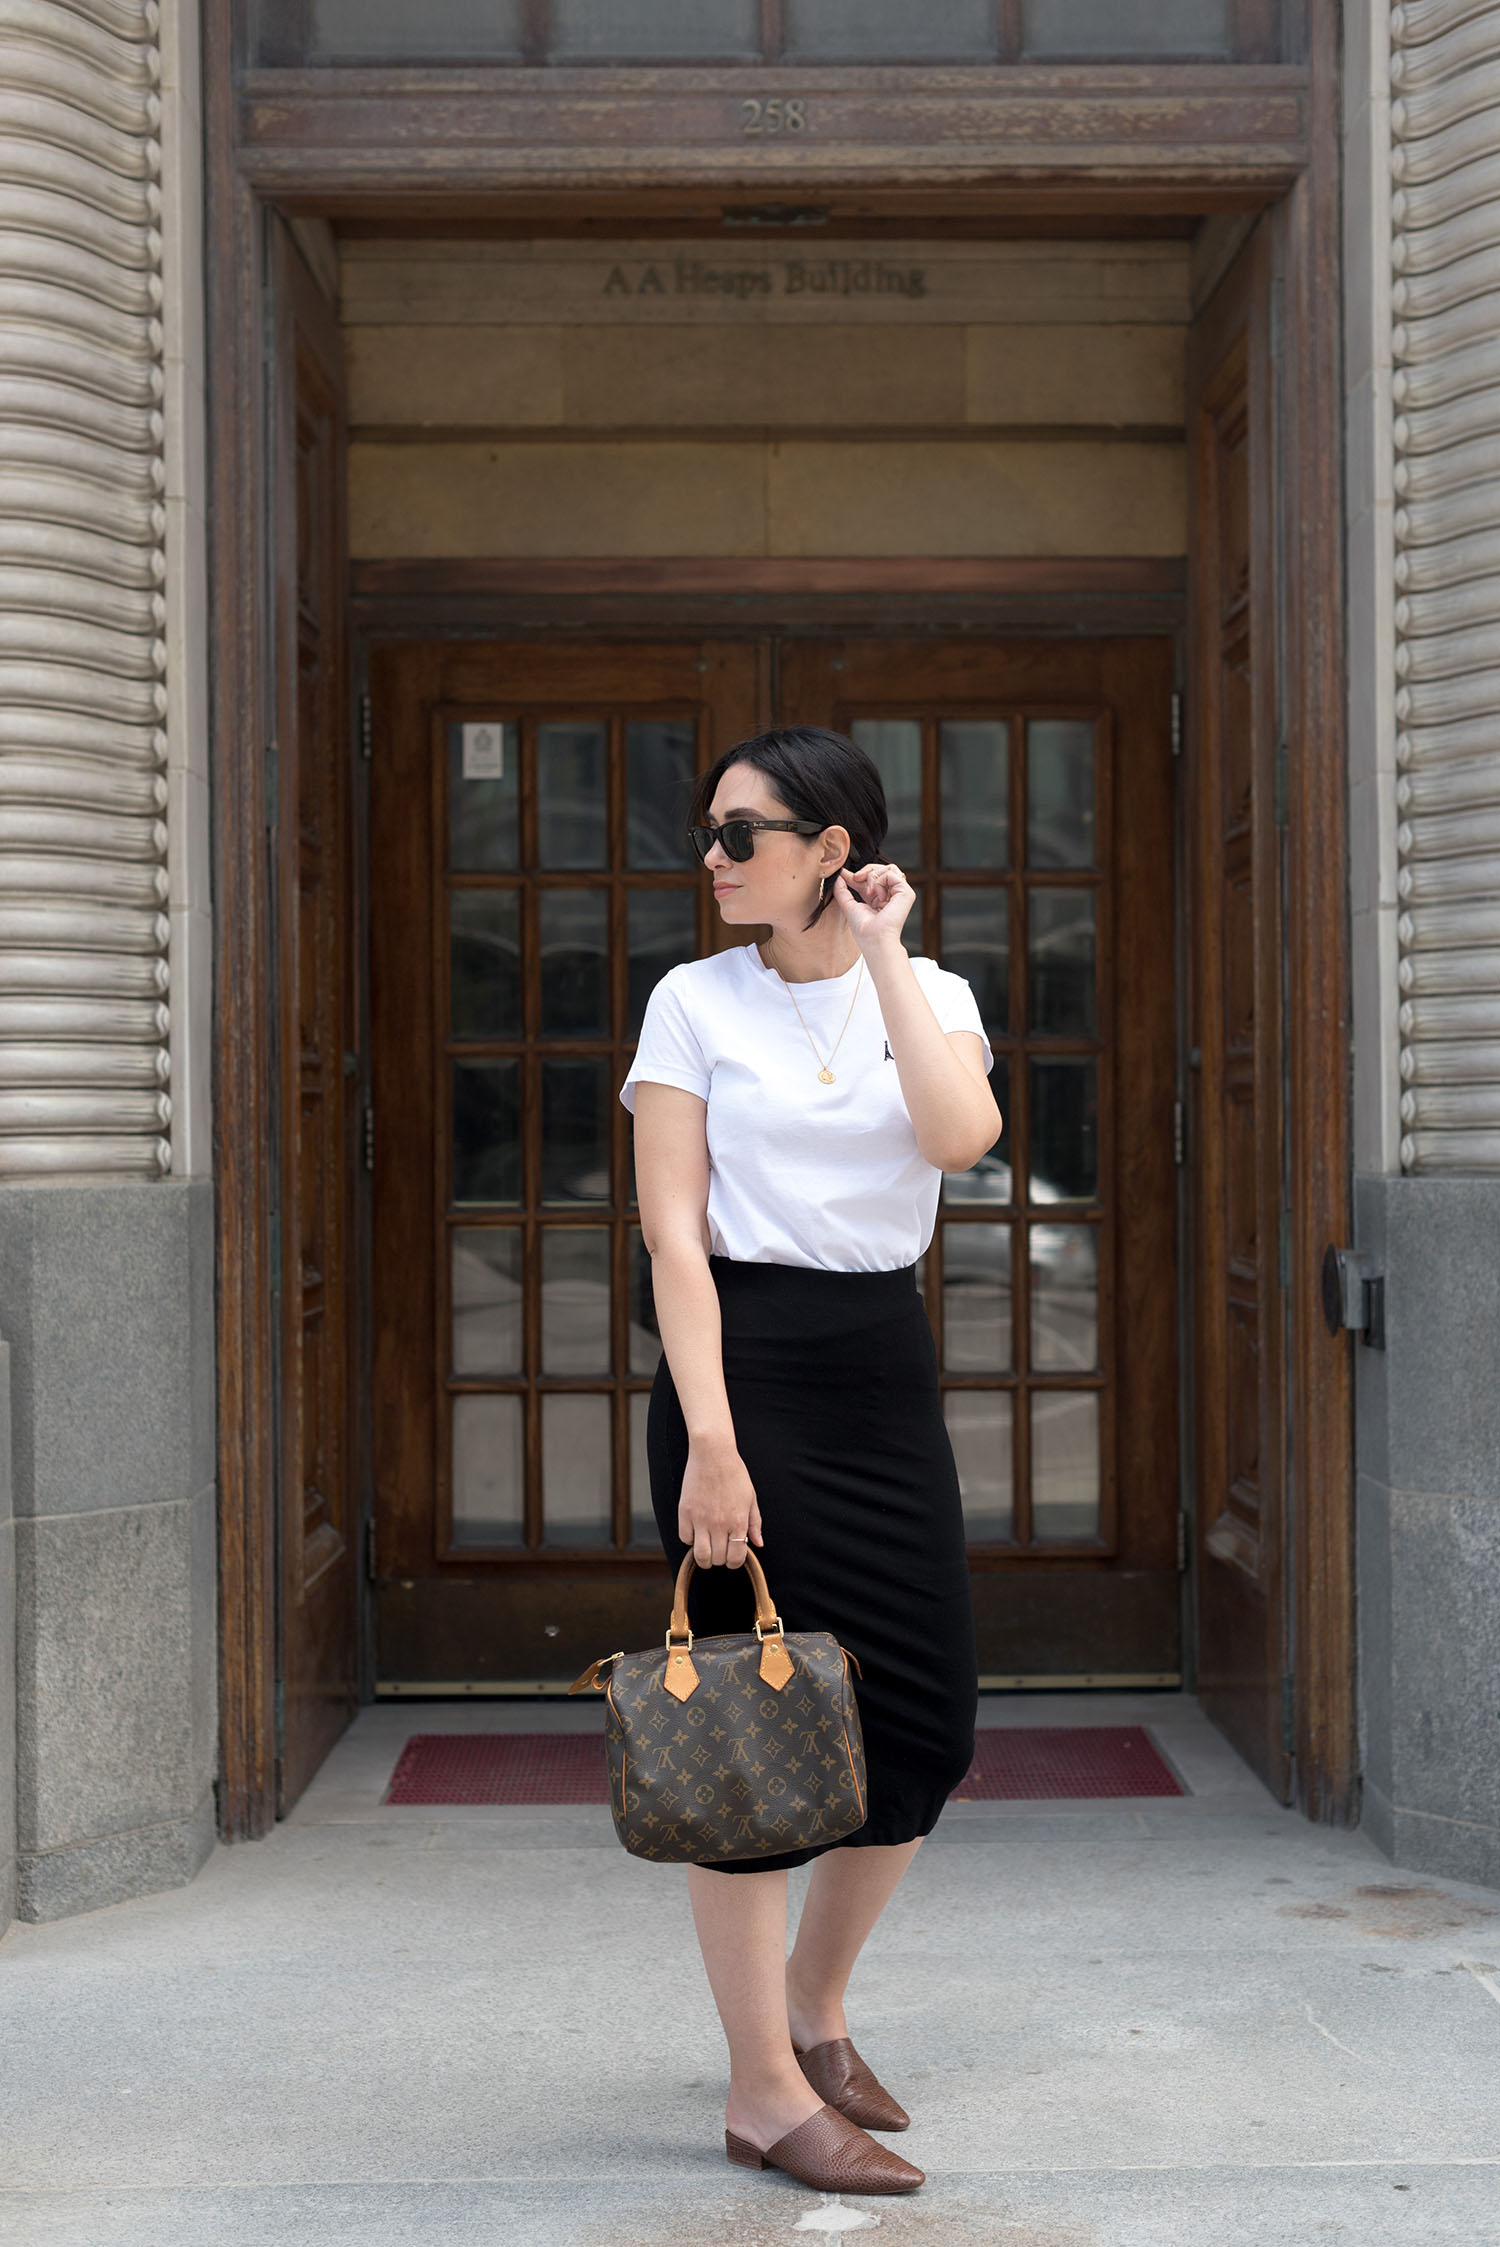 Handbag Louis Vuitton-Paris made in france in black vern…